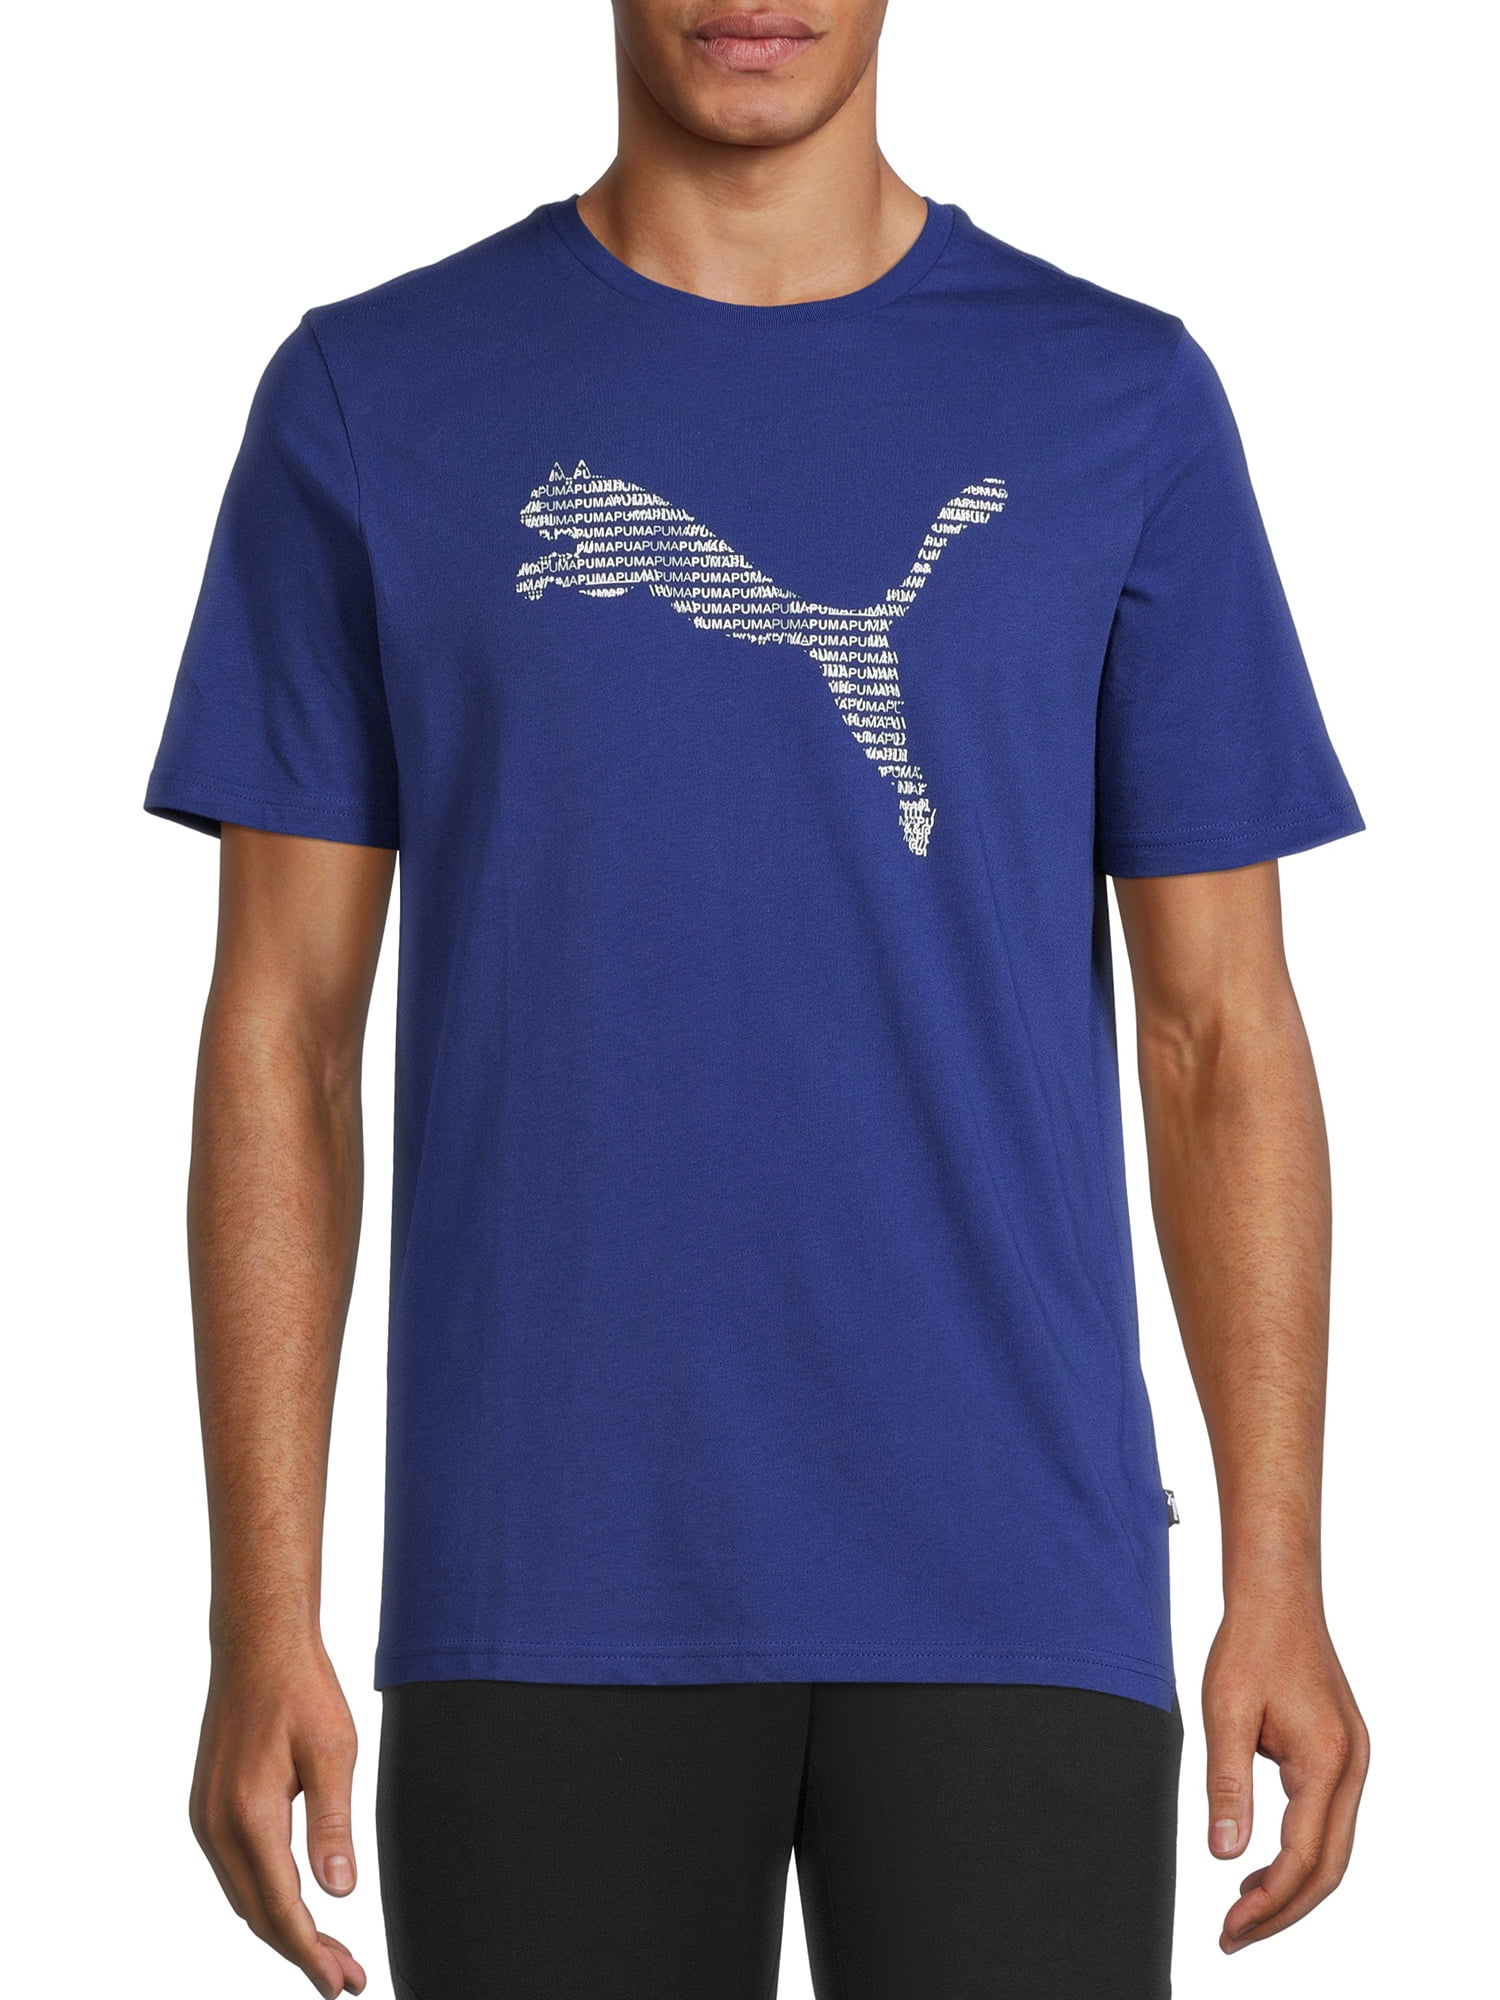 Puma Men's Basic Cat Logo Tee T-Shirt, up to Size 2XL -